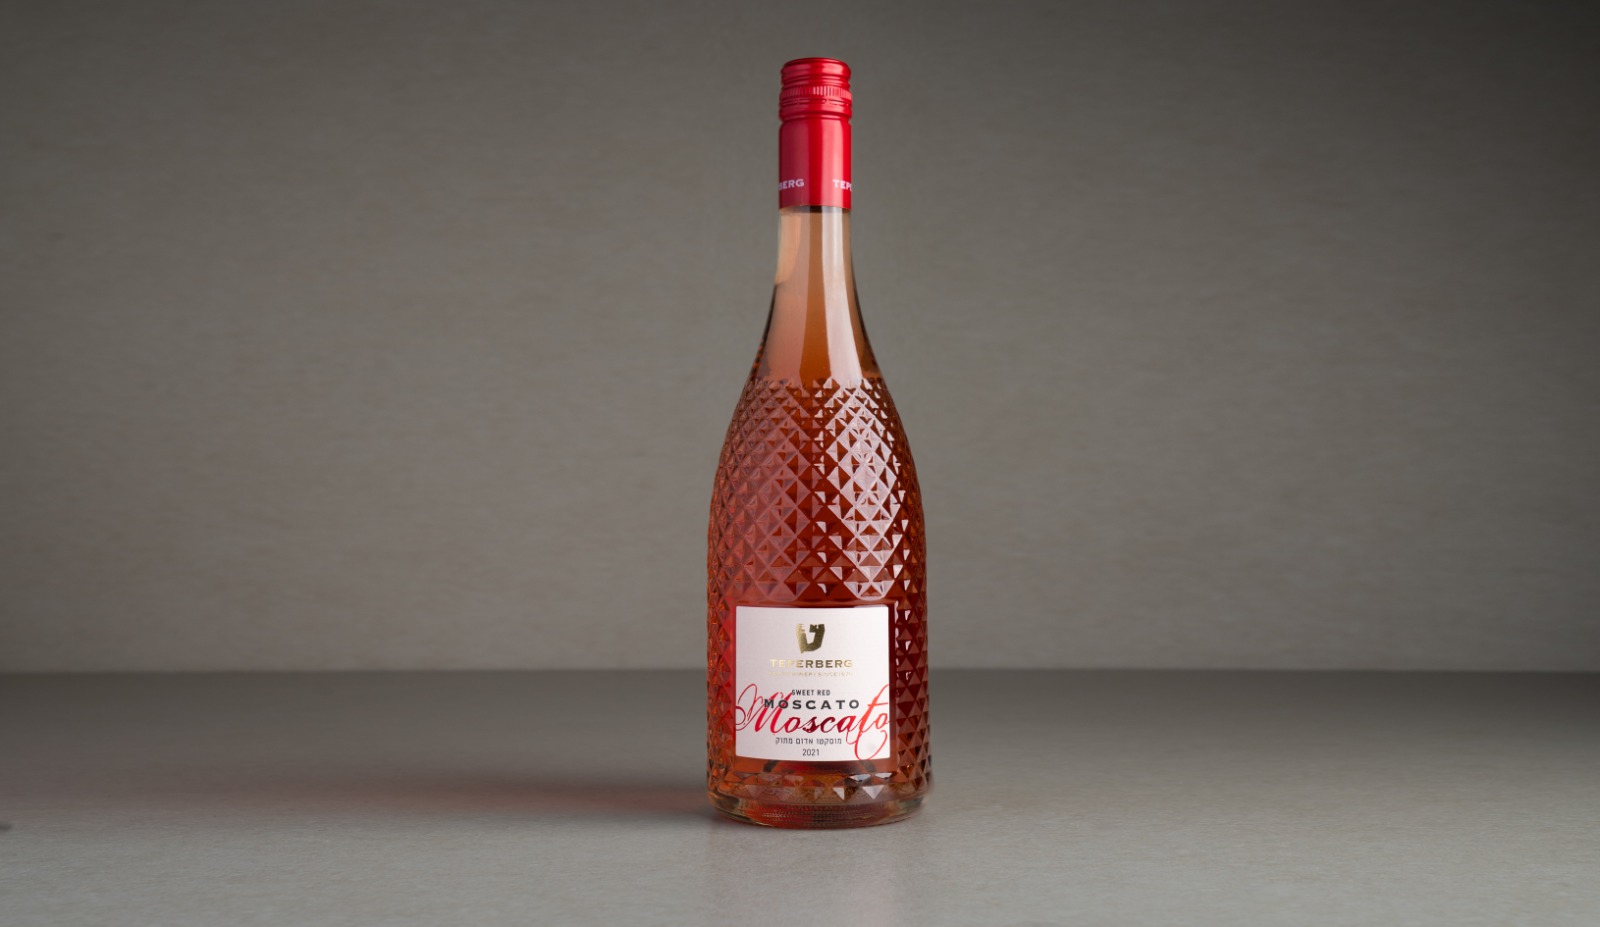 Teperberg red moscato sparkling wine